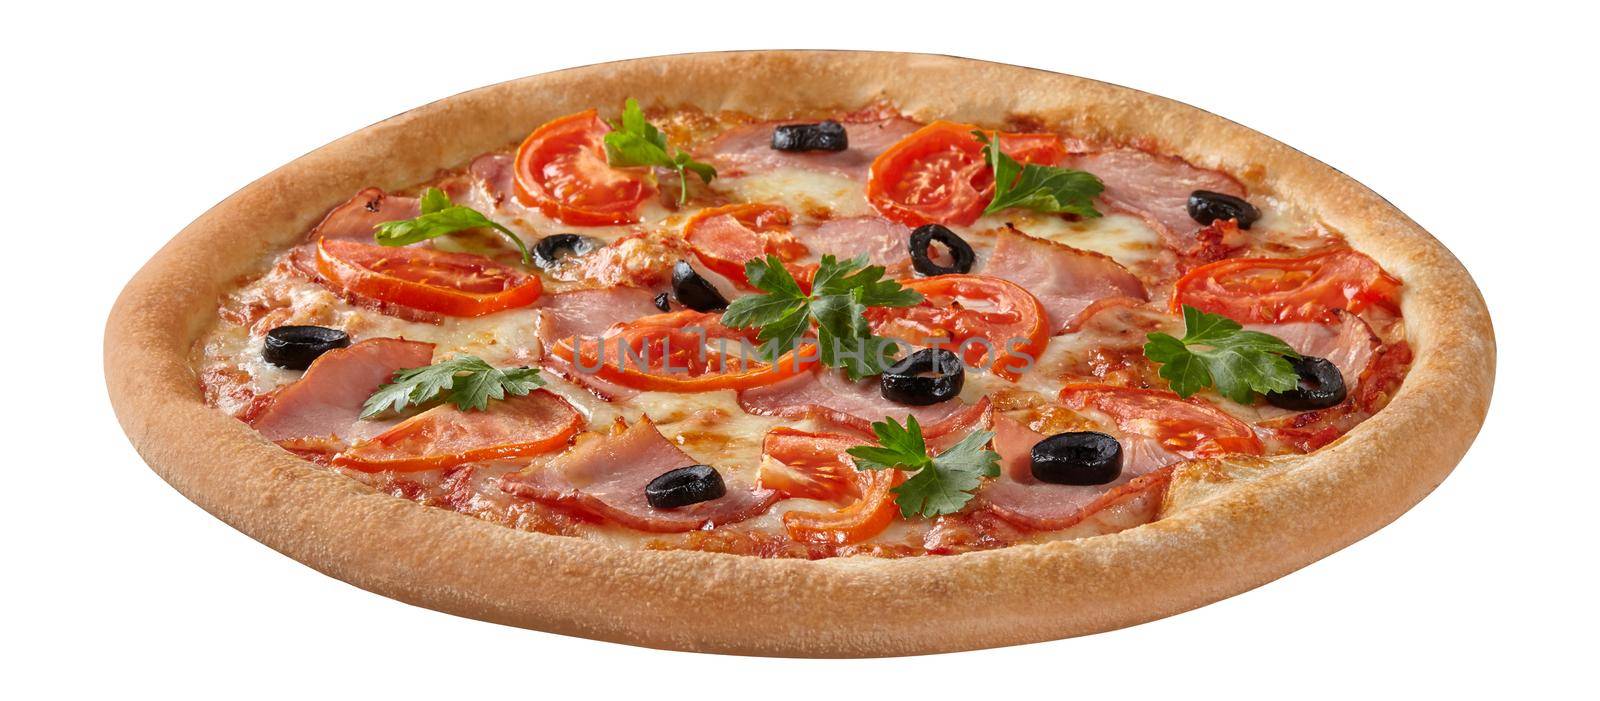 Italian pizza with ham, tomatoes, mozzarella, black olives and fresh parsley isolated on white by nazarovsergey